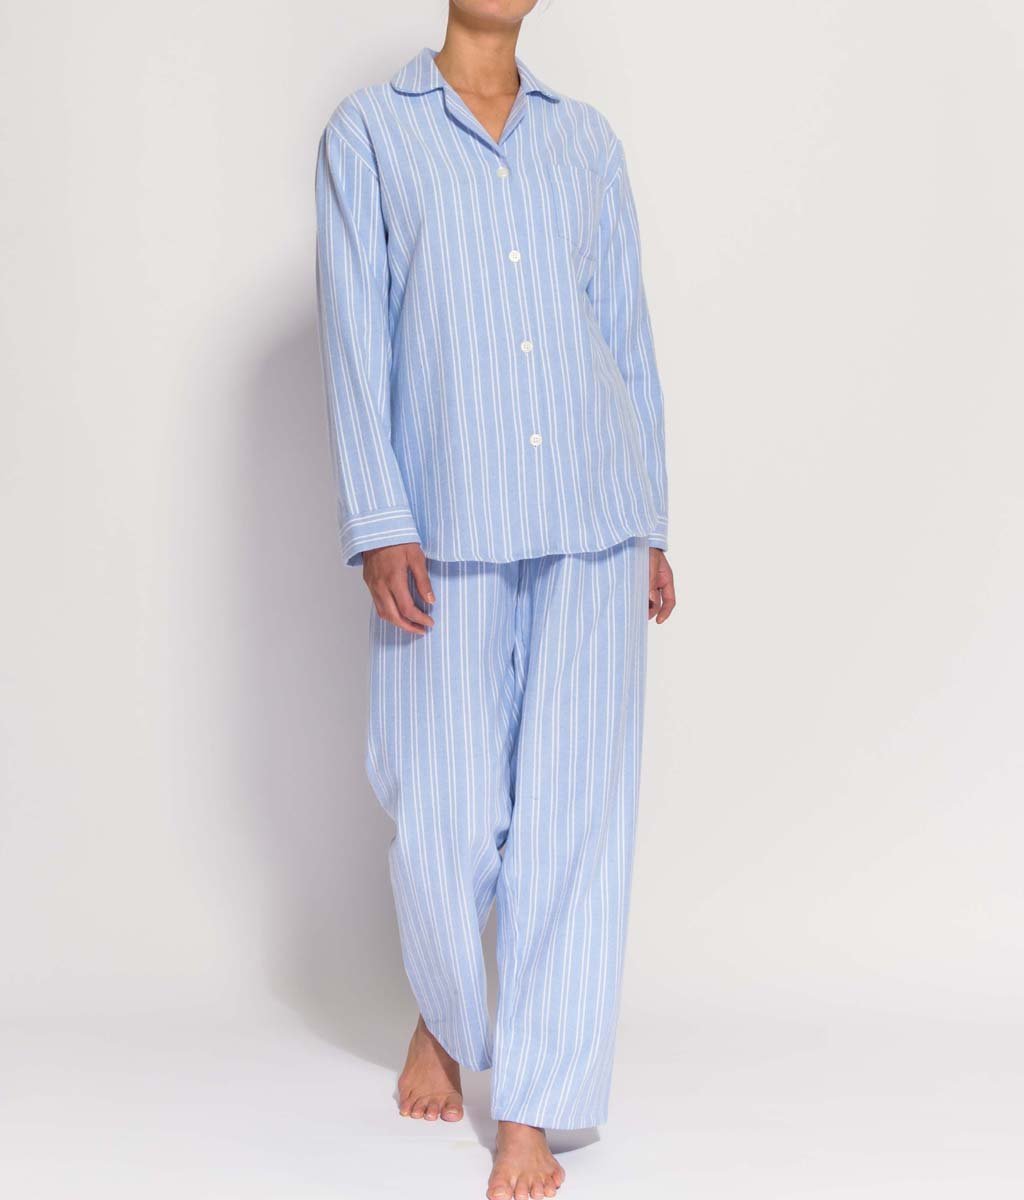 British Boxers Two-Fold Flannel (Westwood Blue Stripe) Pyjamas - Sandra Dee - Product Shot - Front